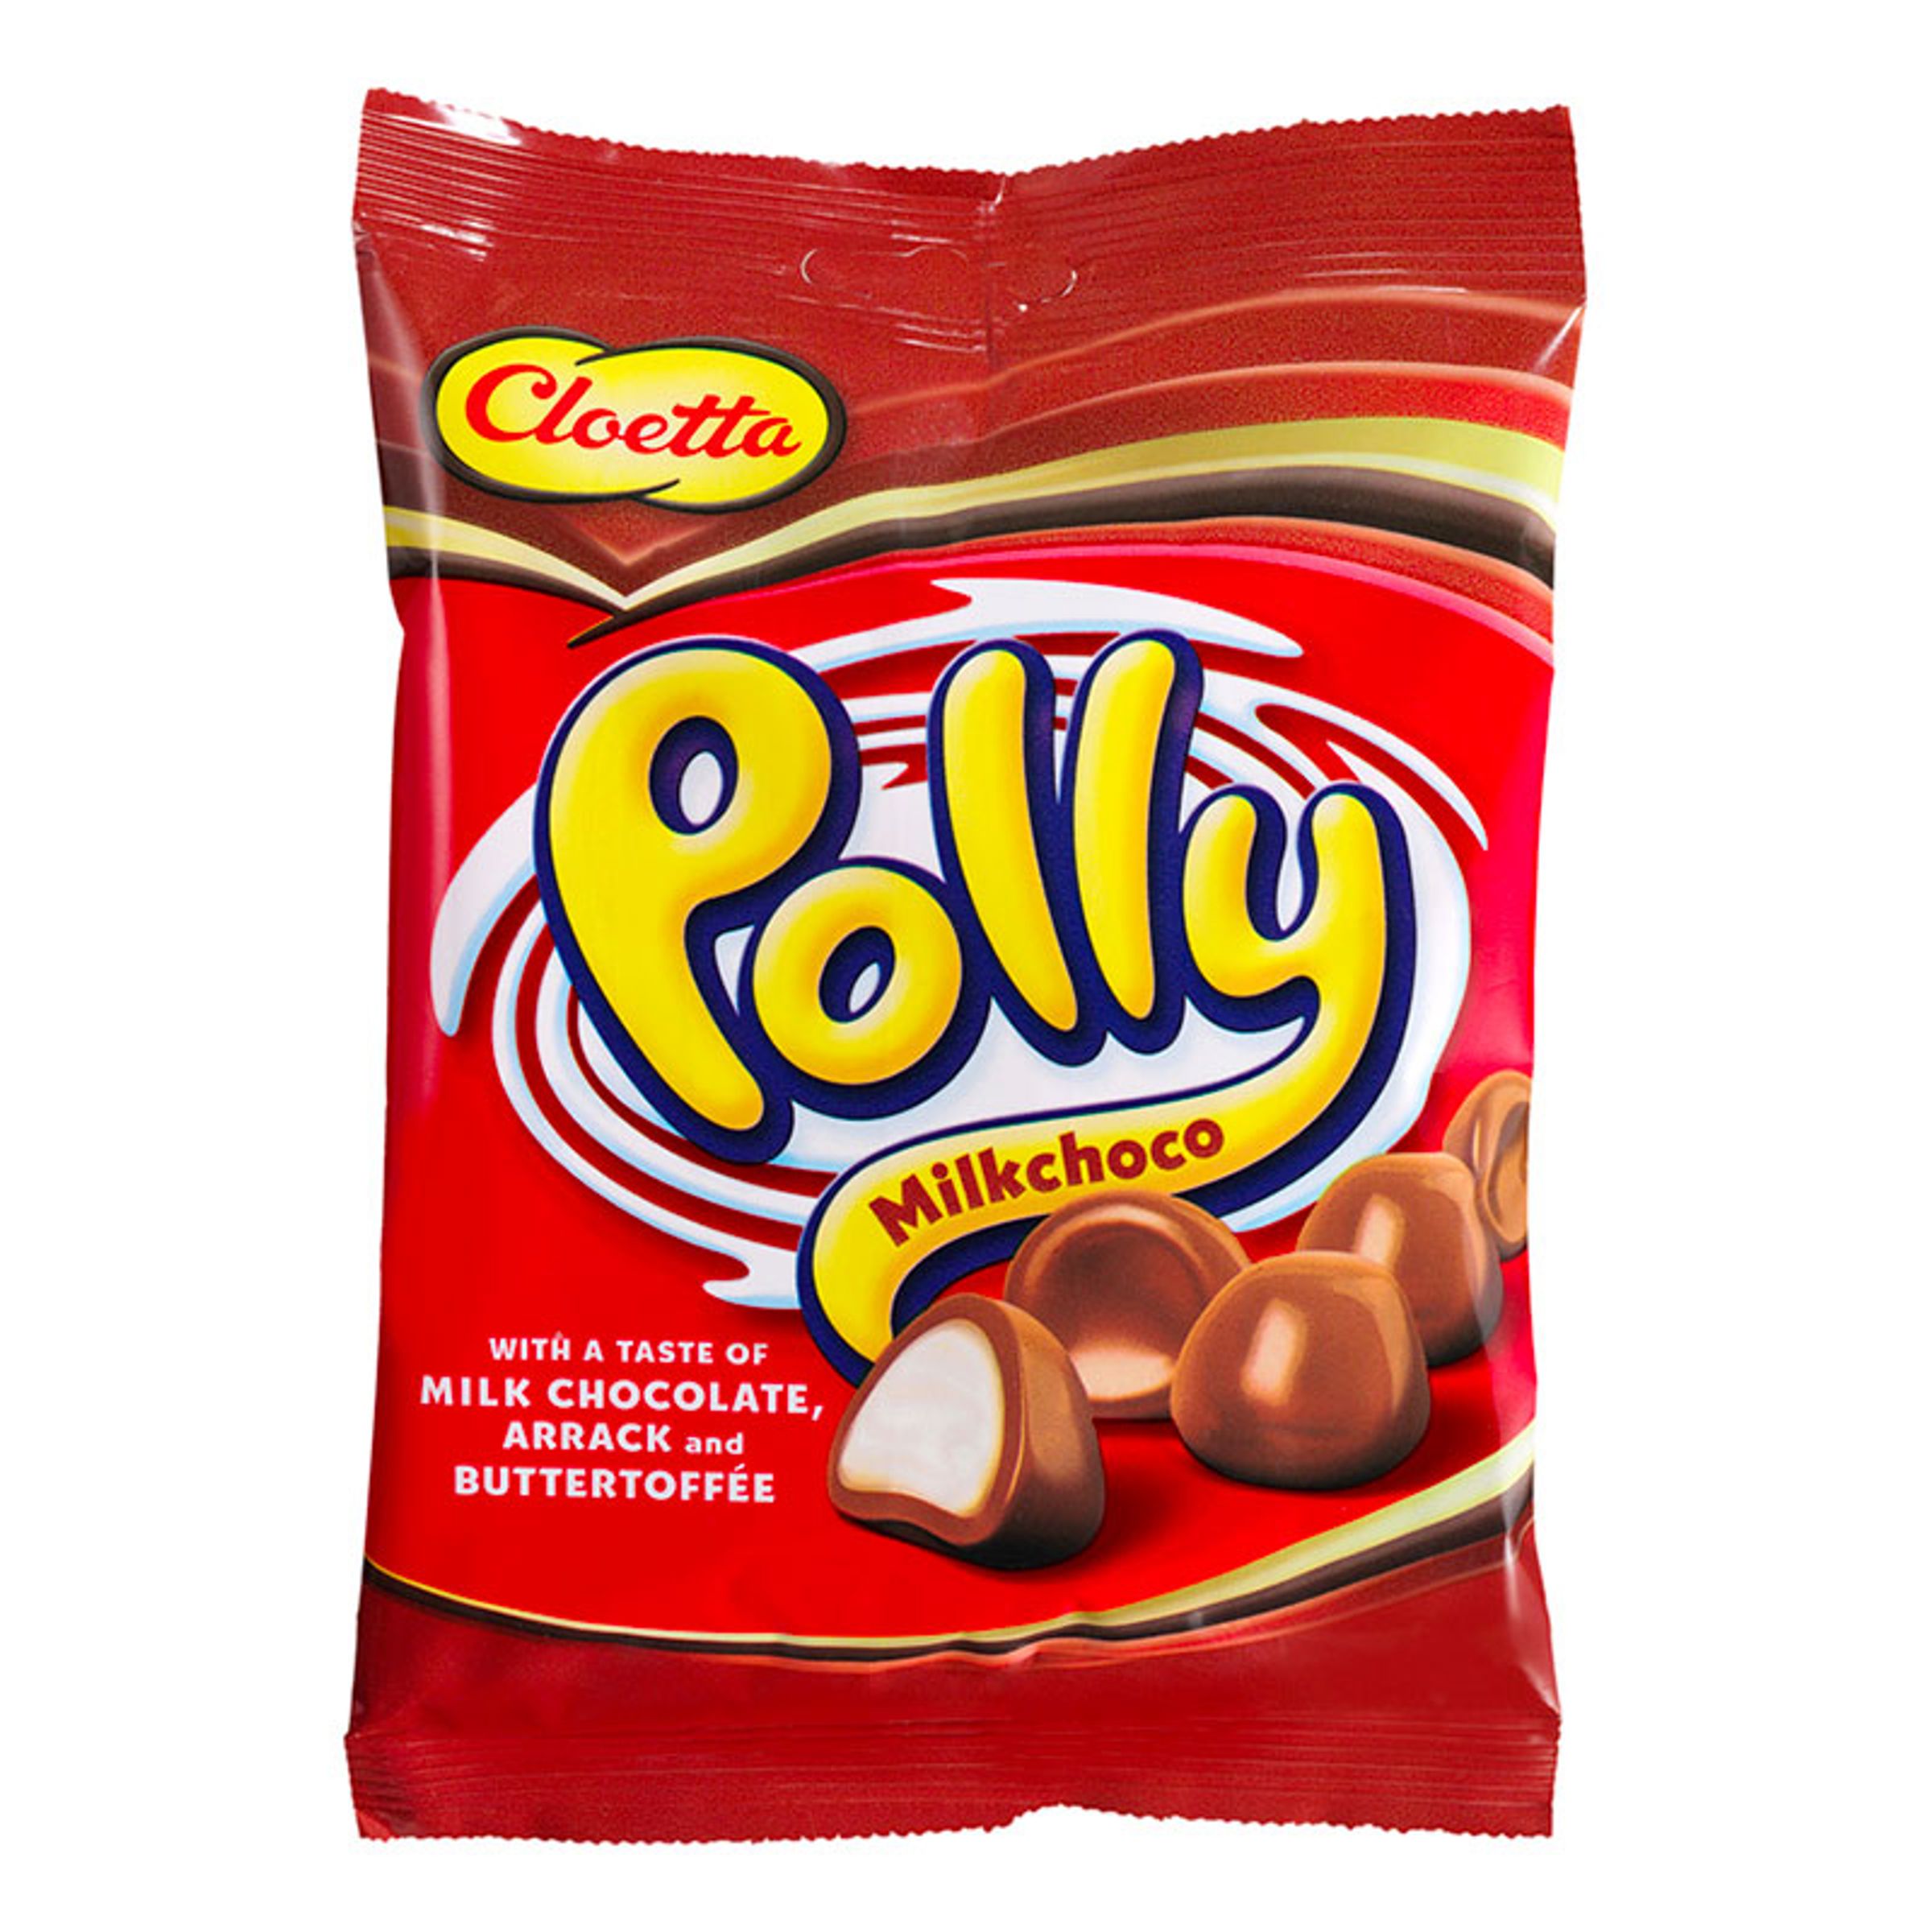 Polly Mjölkchoklad Godispåse - 130 gram